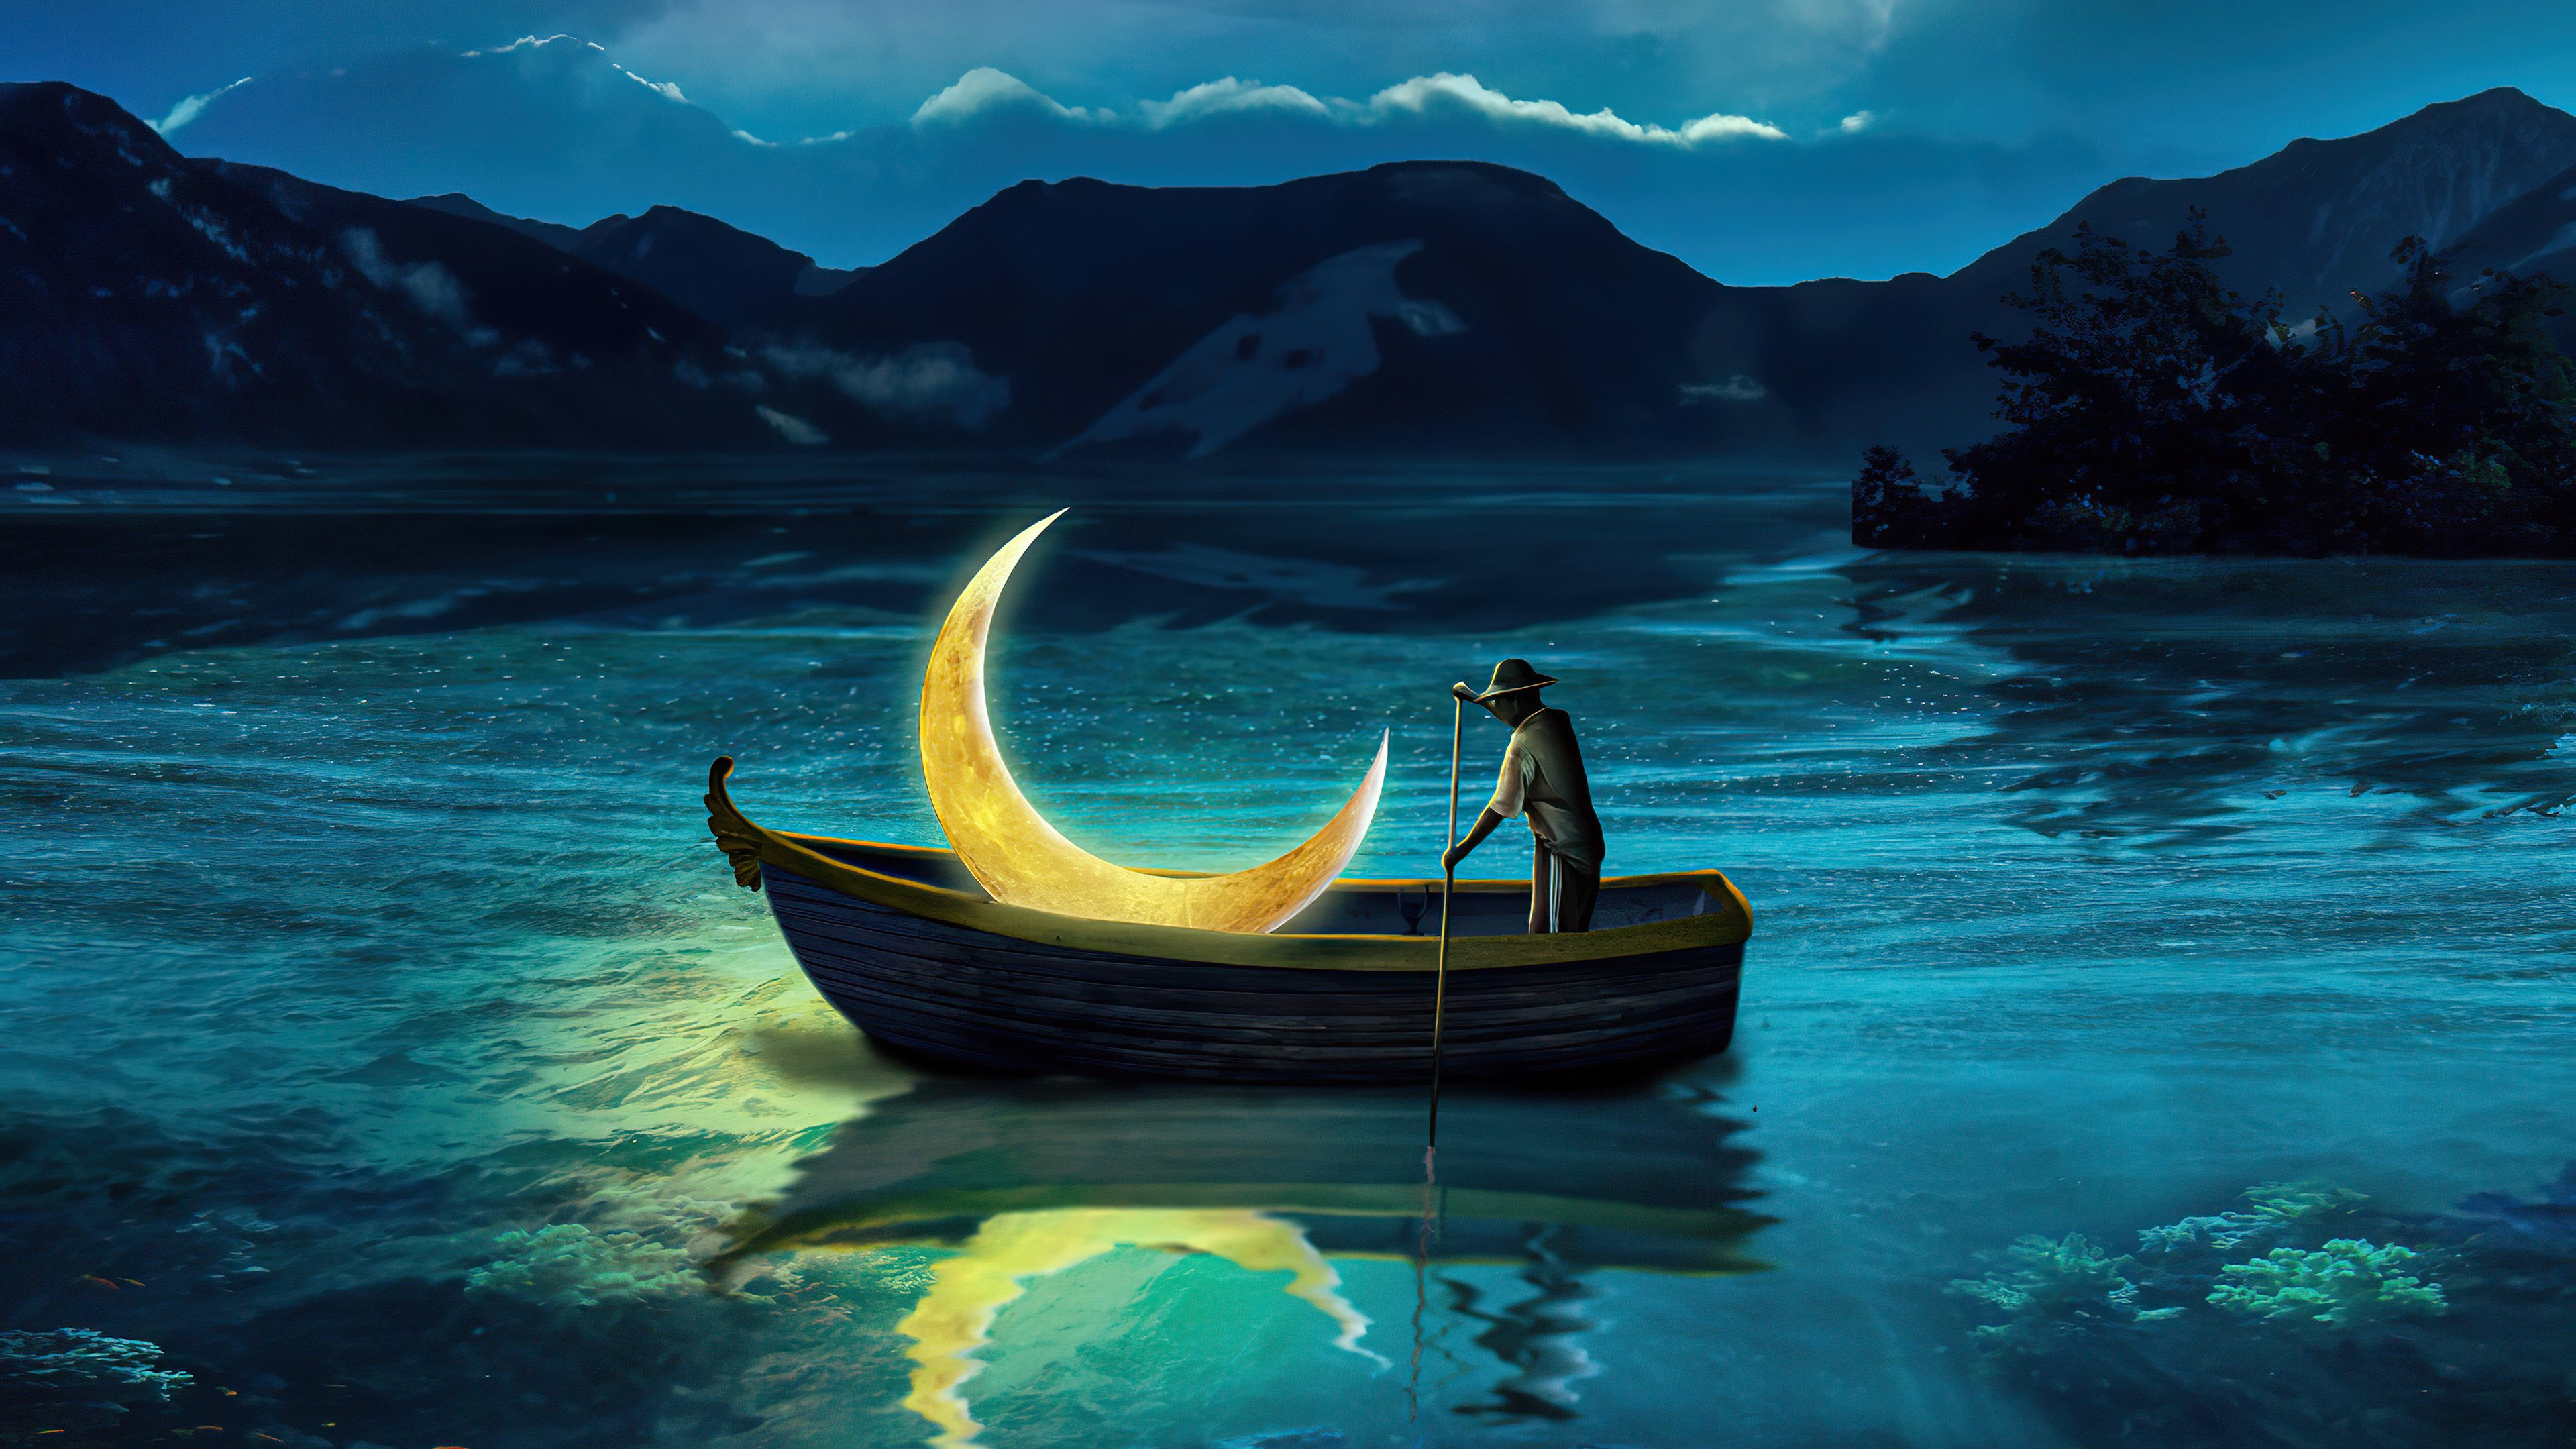 Wallpaper Fishing the moon